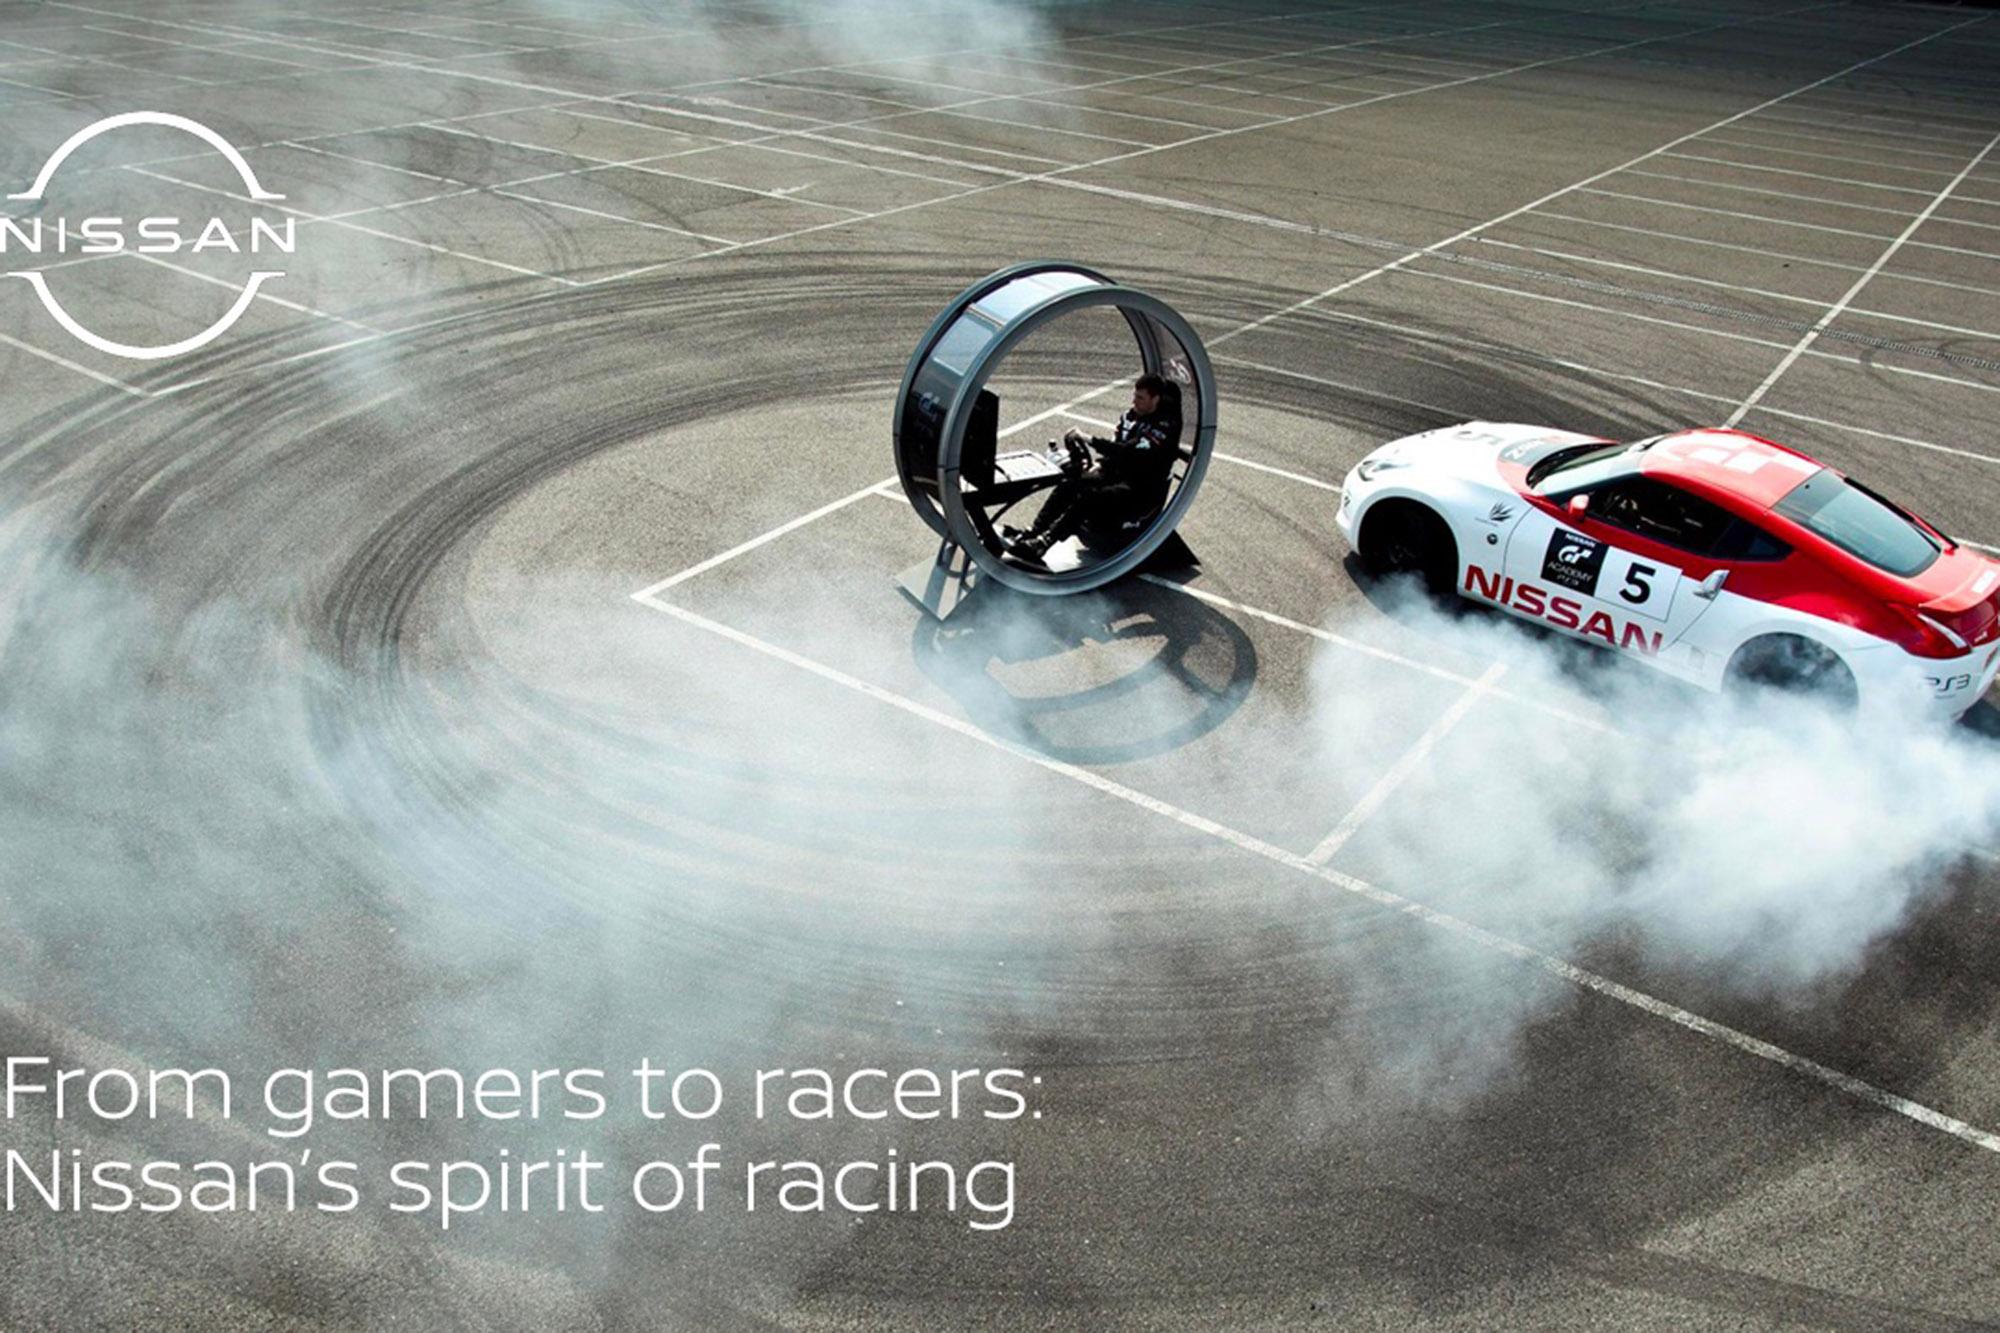 From Gamers to Racers: Το αγωνιστικό πνεύμα της Nissan στον κινηματογράφο